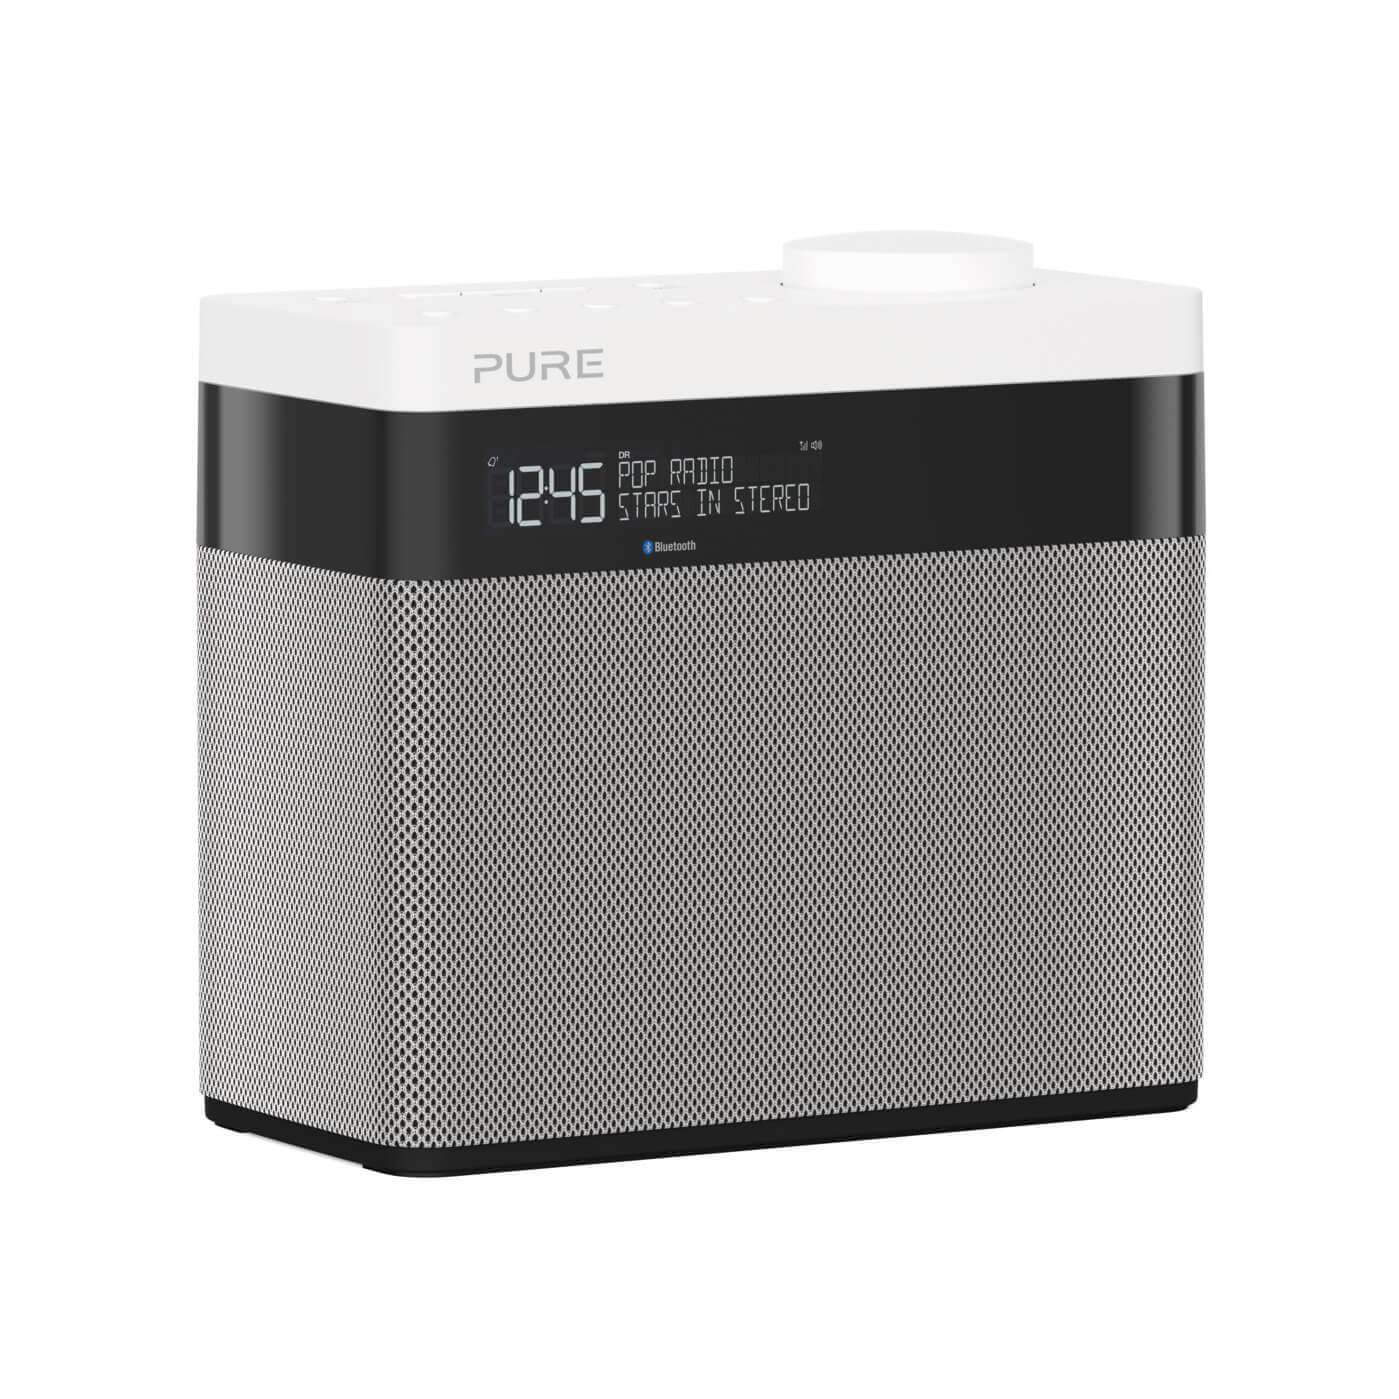 Pure - Pop Maxi Bluetooth DAB+ radio Bluetooth, DAB+, FM